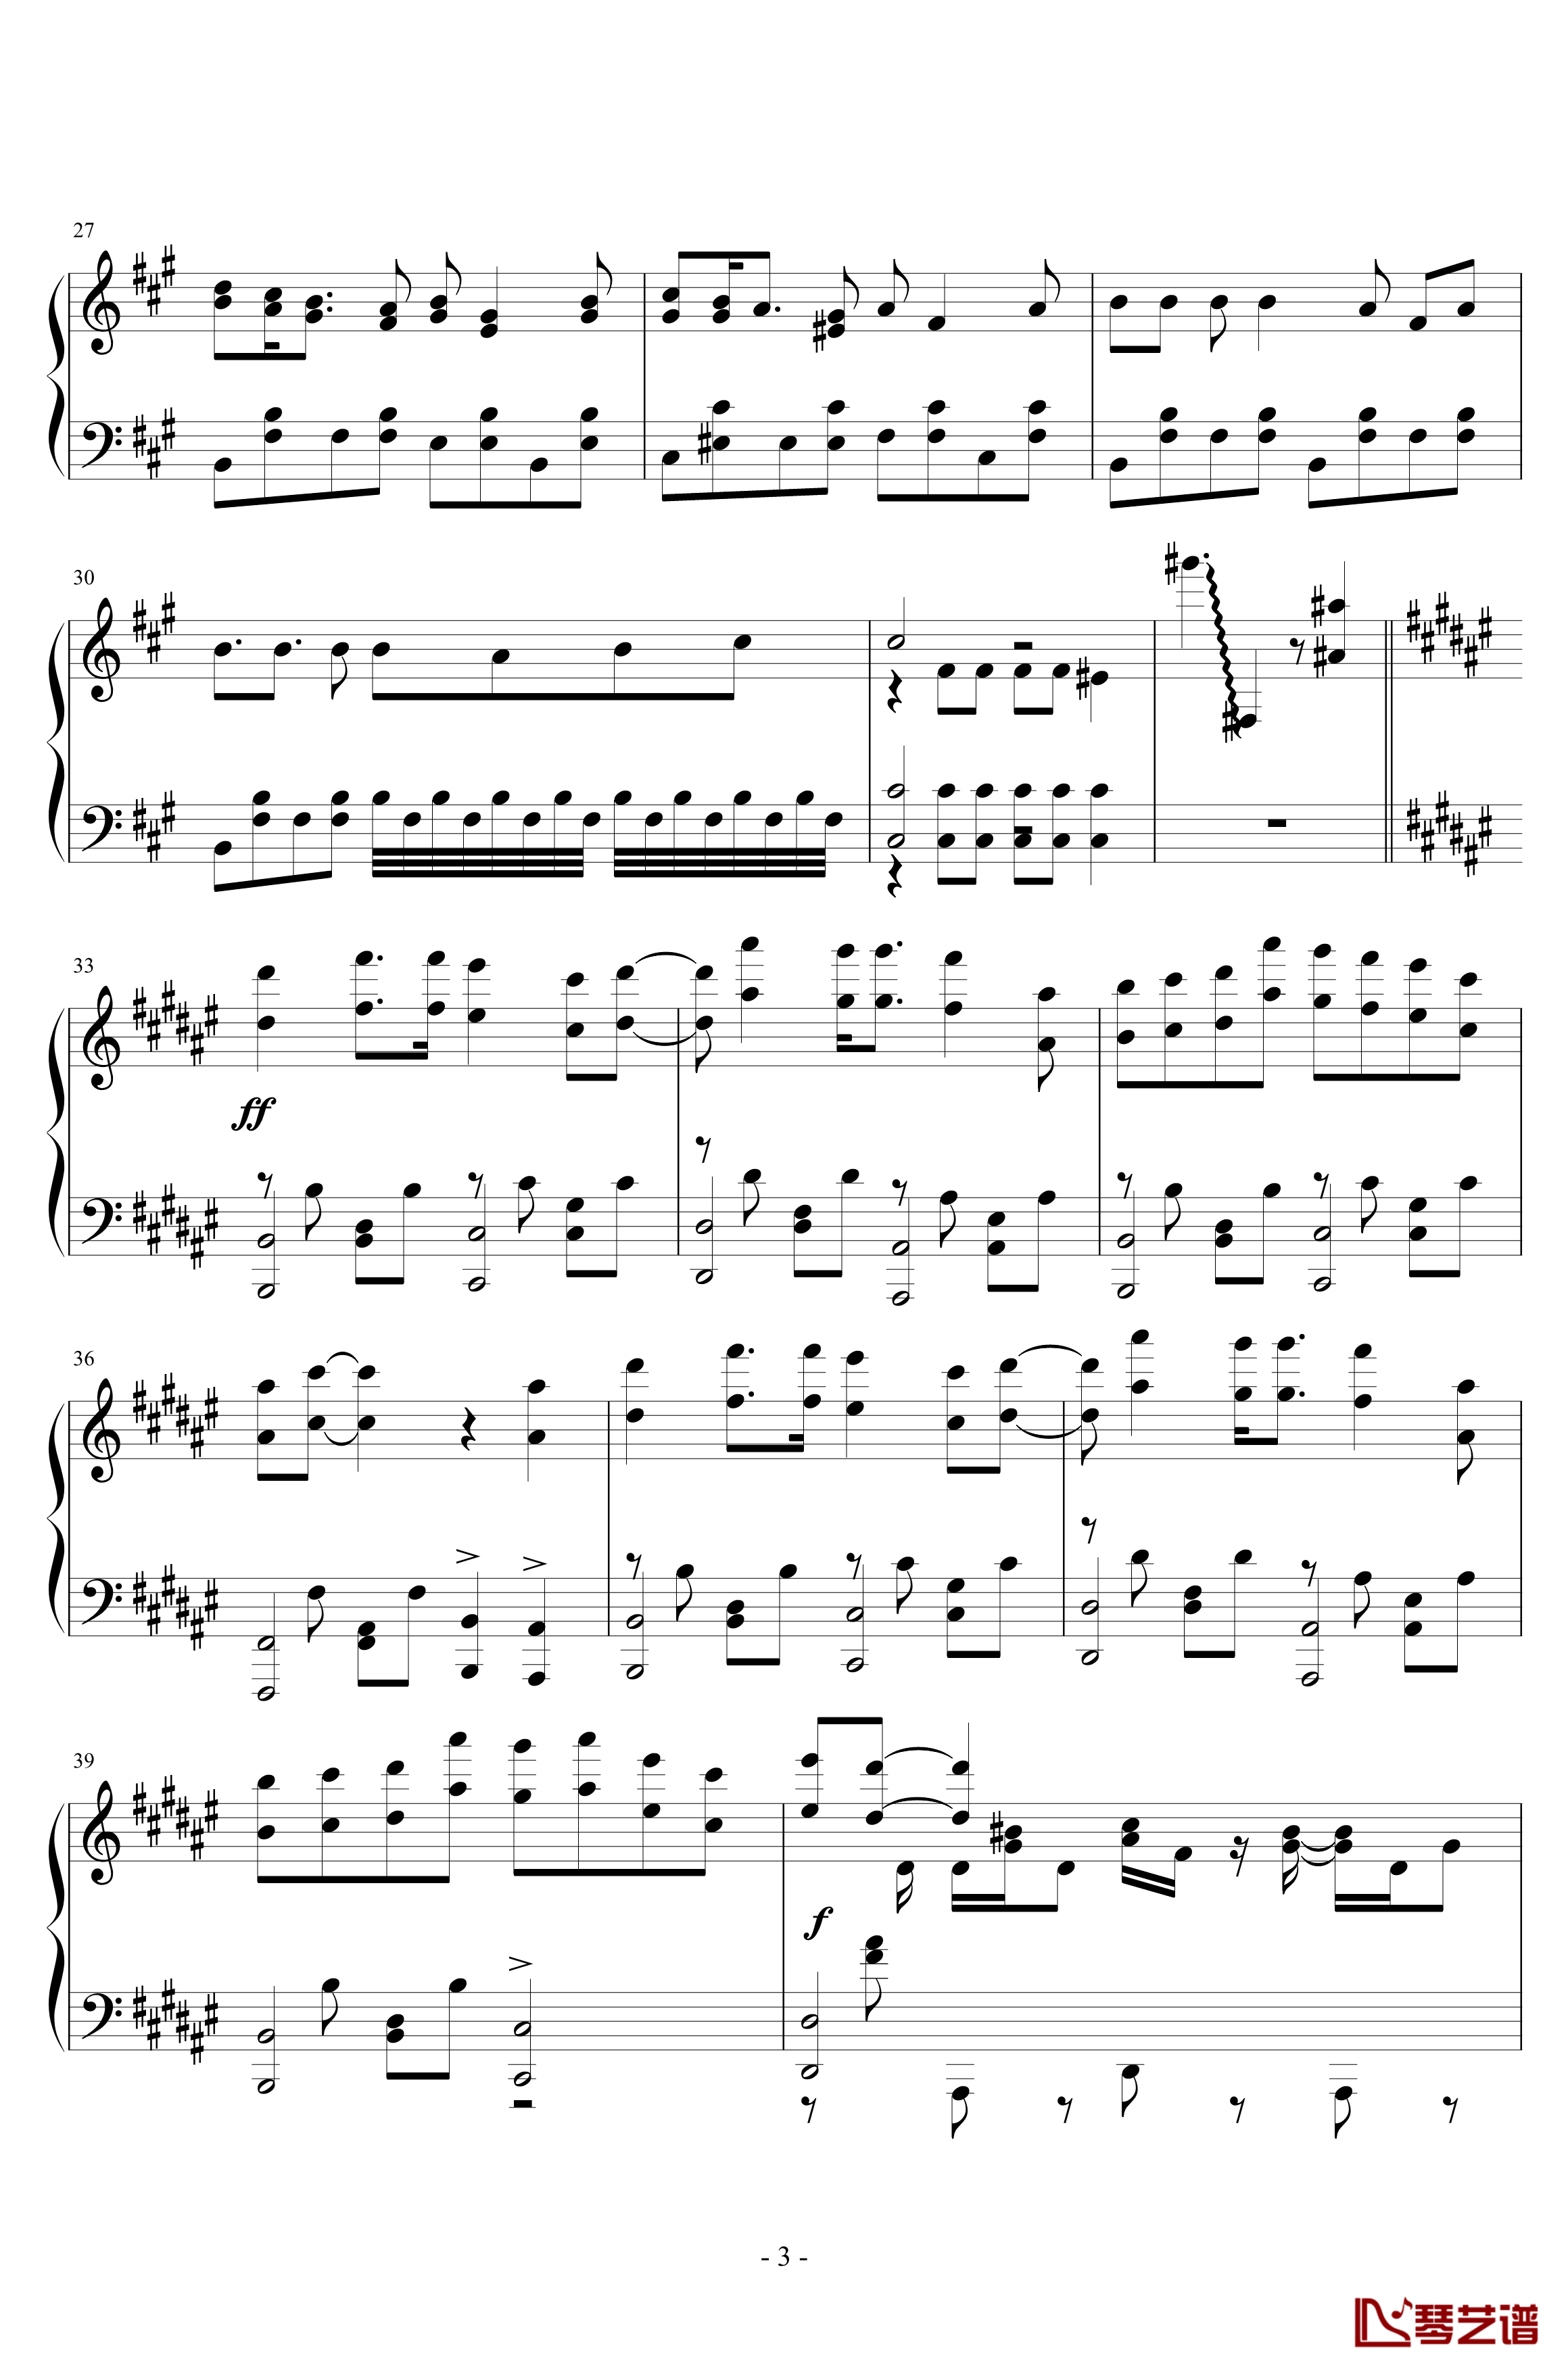 SNOBBISM钢琴谱 -Neru3